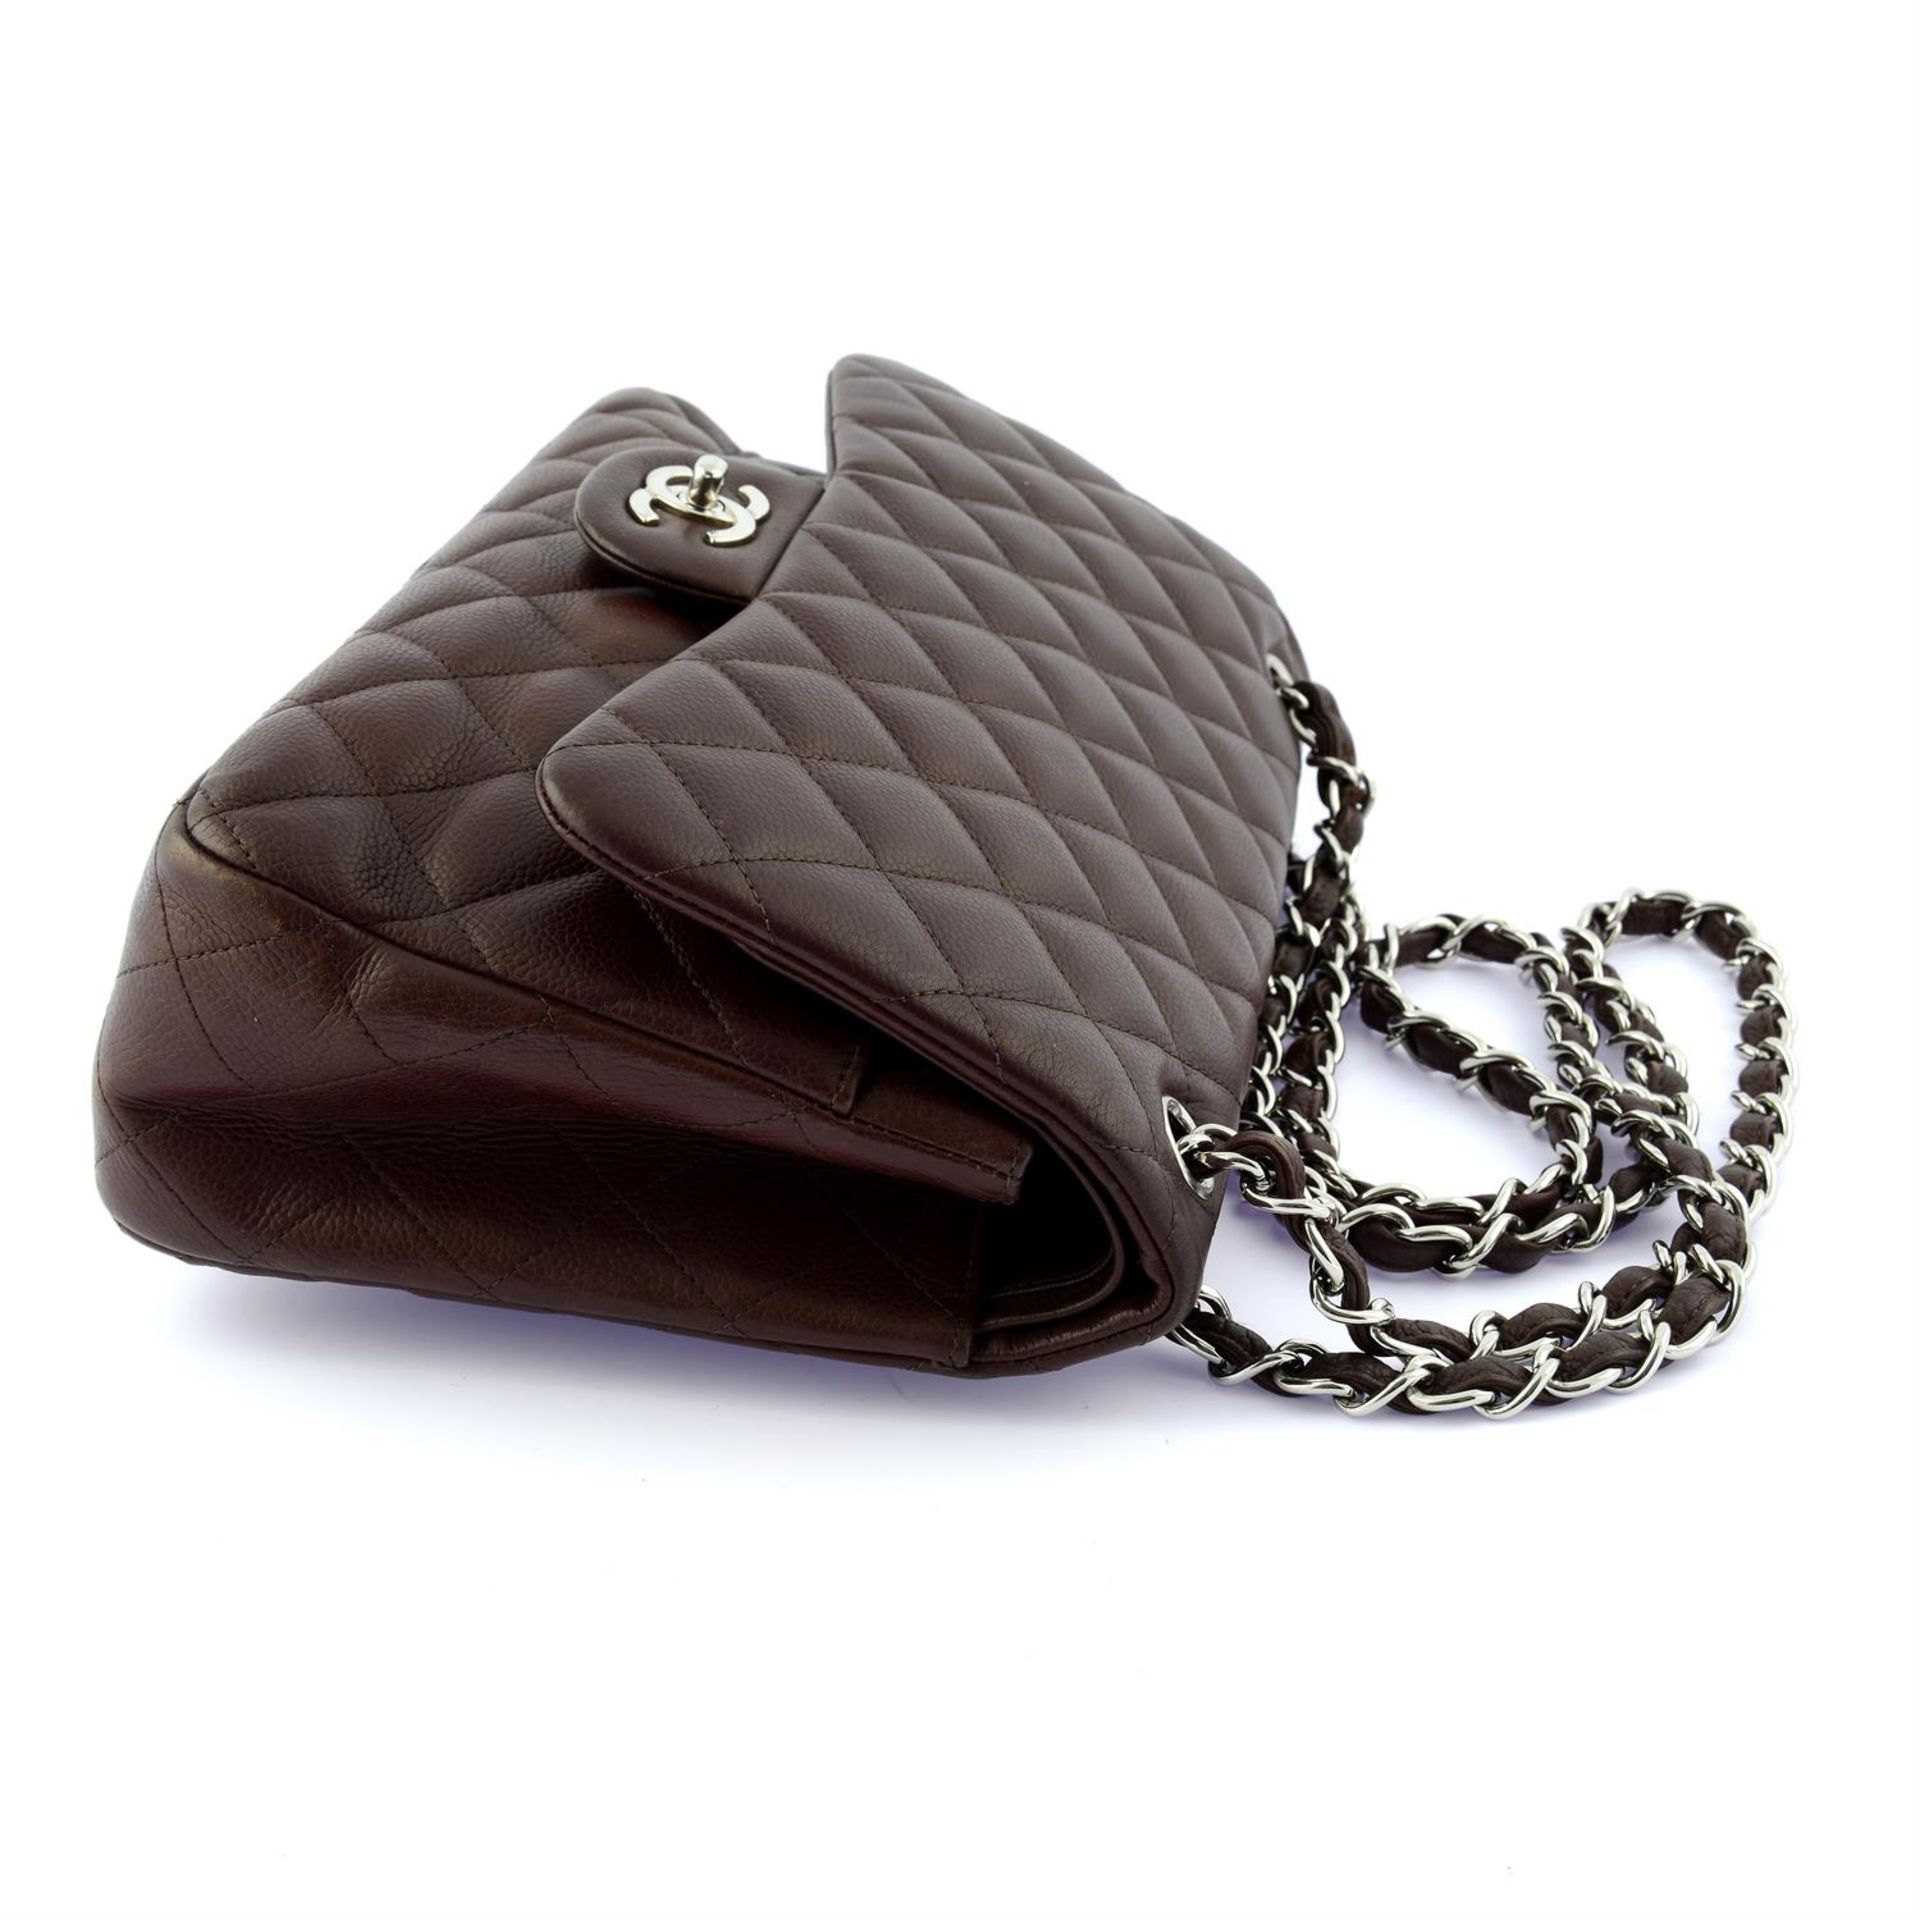 CHANEL - a burgundy caviar leather double flap classic handbag. - Image 3 of 6